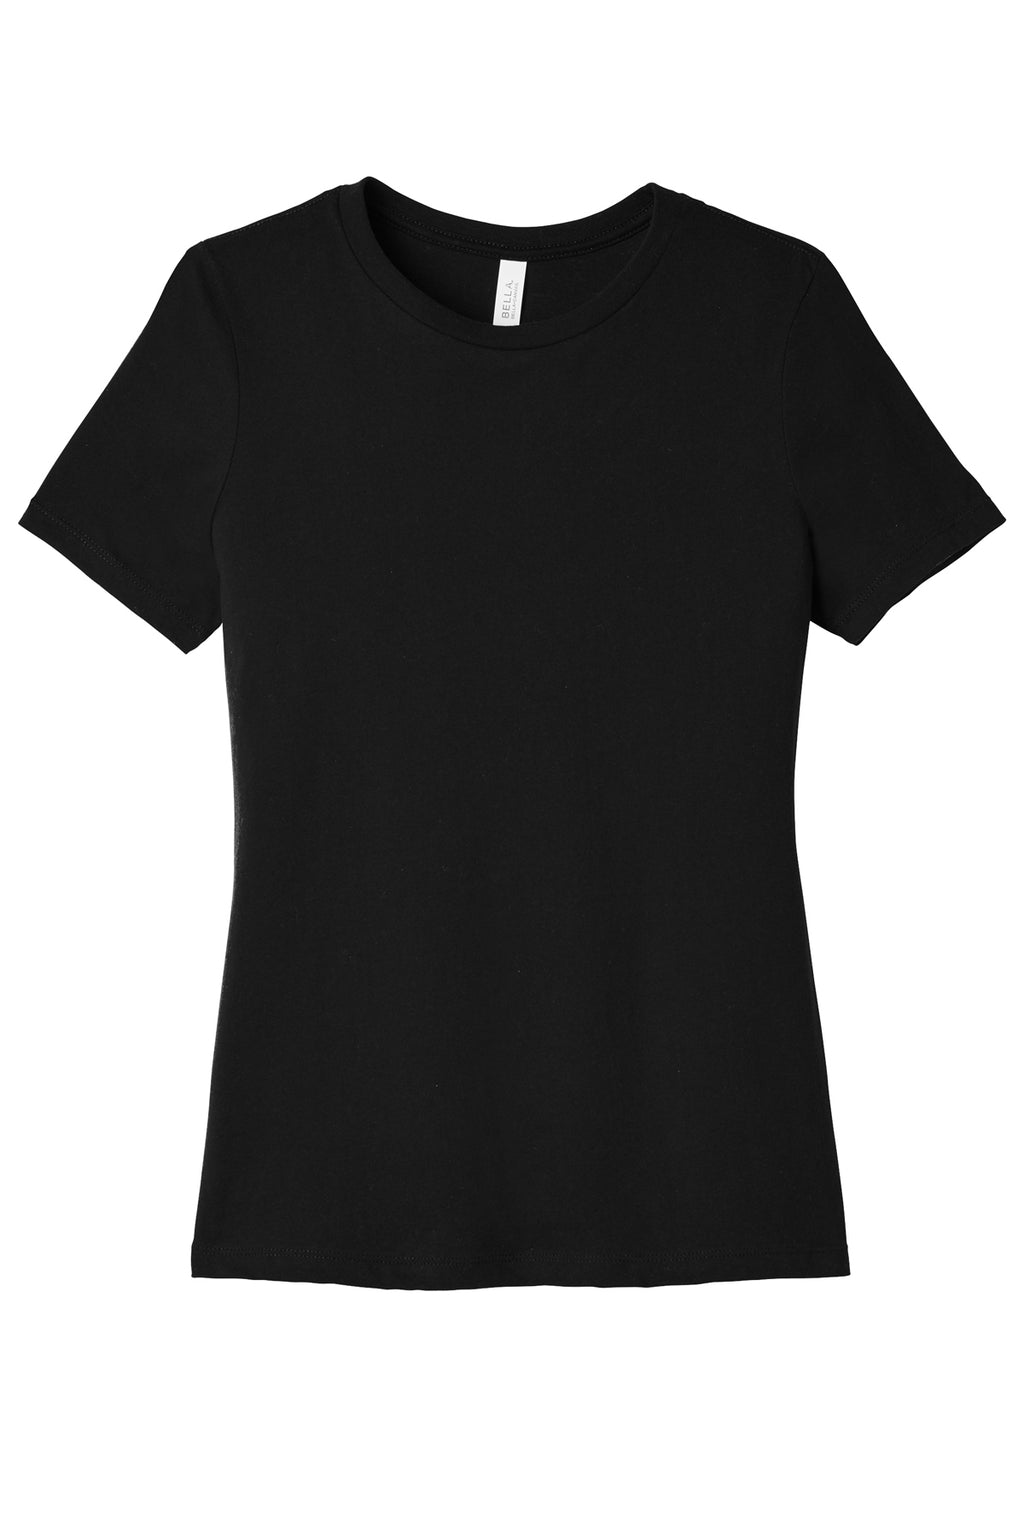 Bella Canvas Womens Cotton Short Sleeve Shirts Black